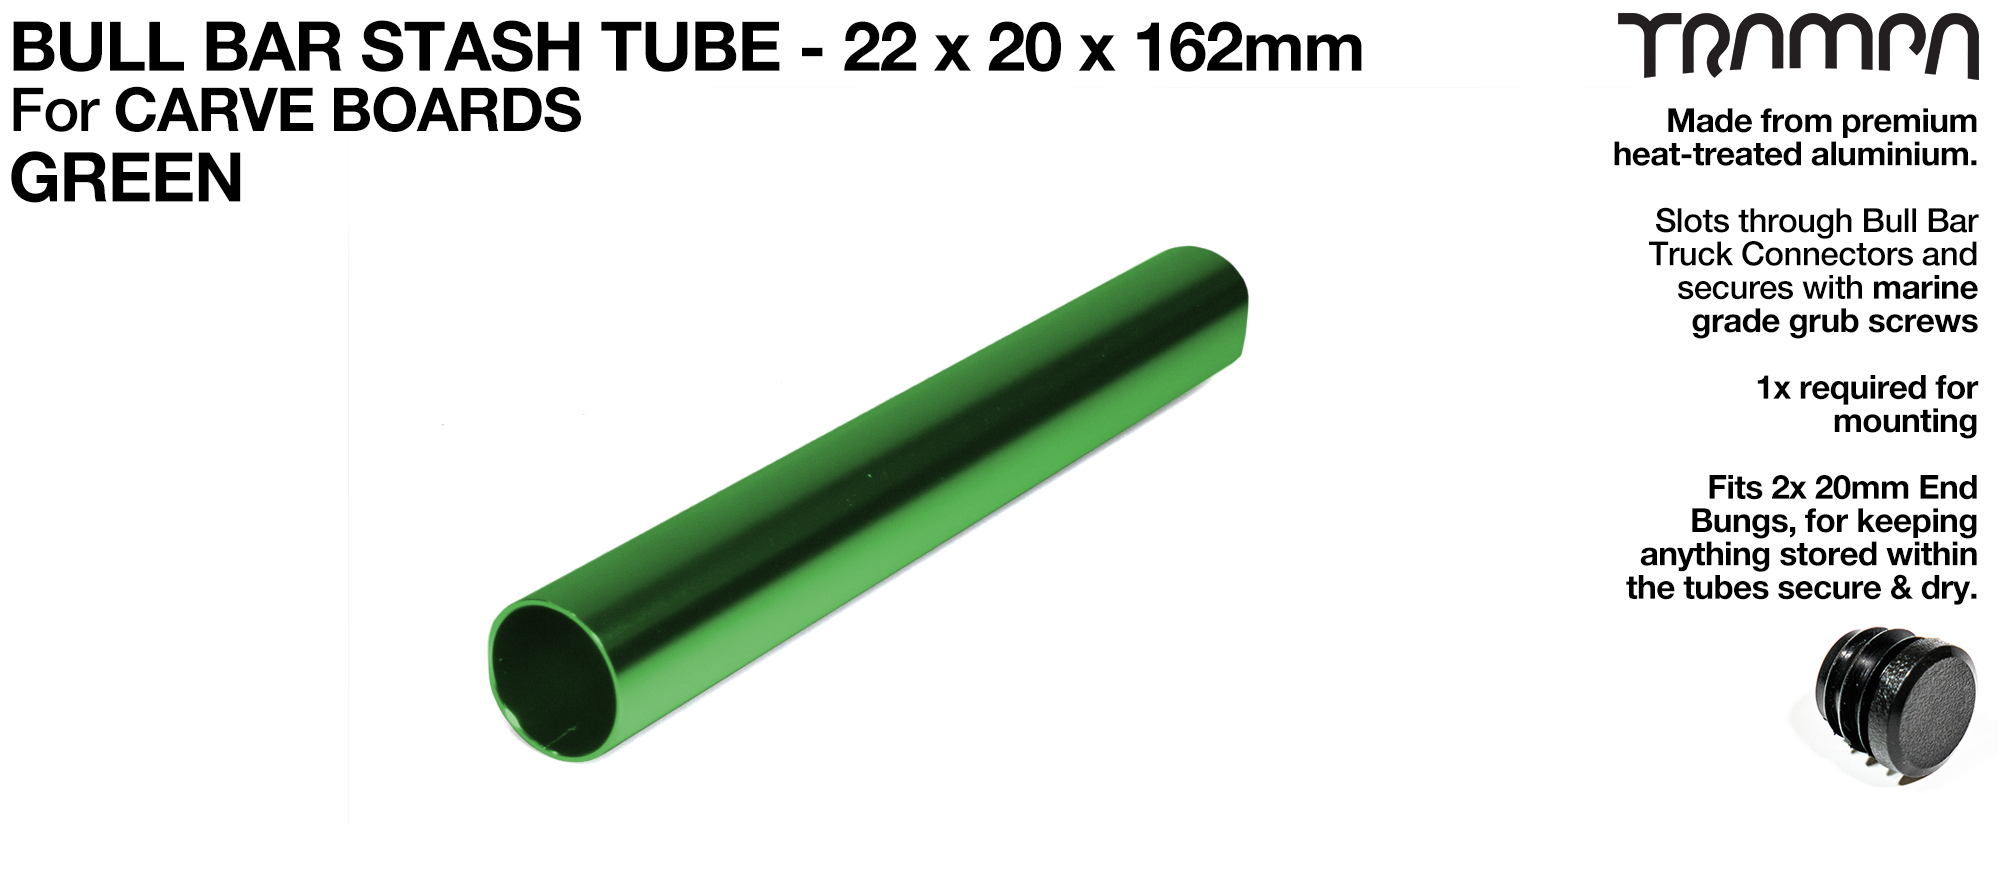 Carve Board Bull Bar Hollow Aluminium Stash Tube - GREEN 22 x 20 x 162 mm 